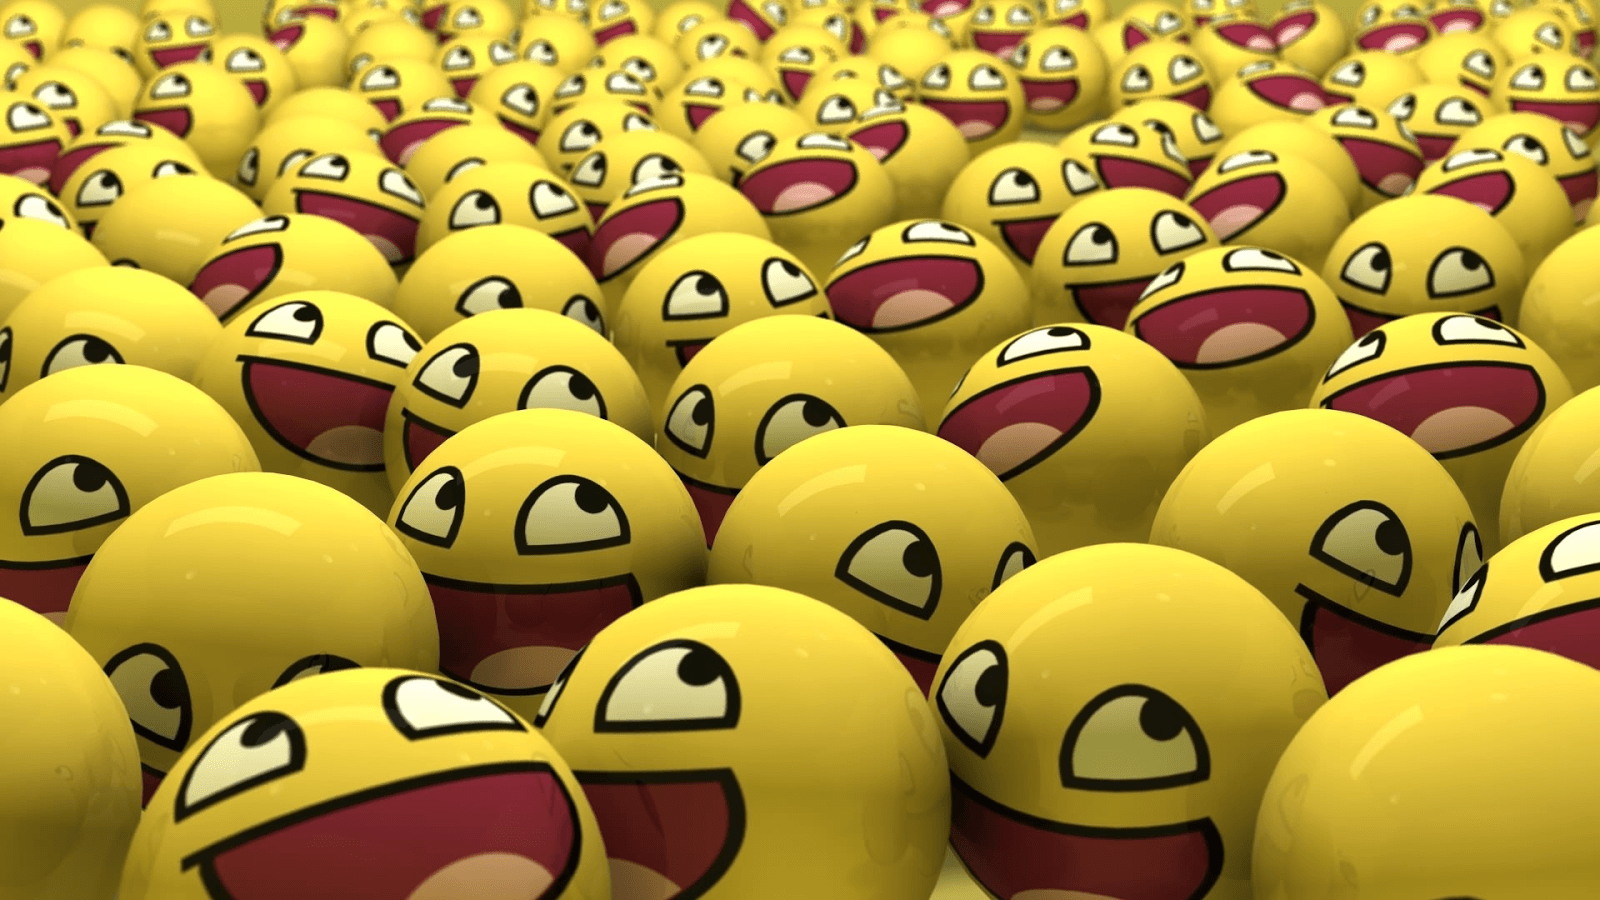 48+] Emoji Face Wallpaper